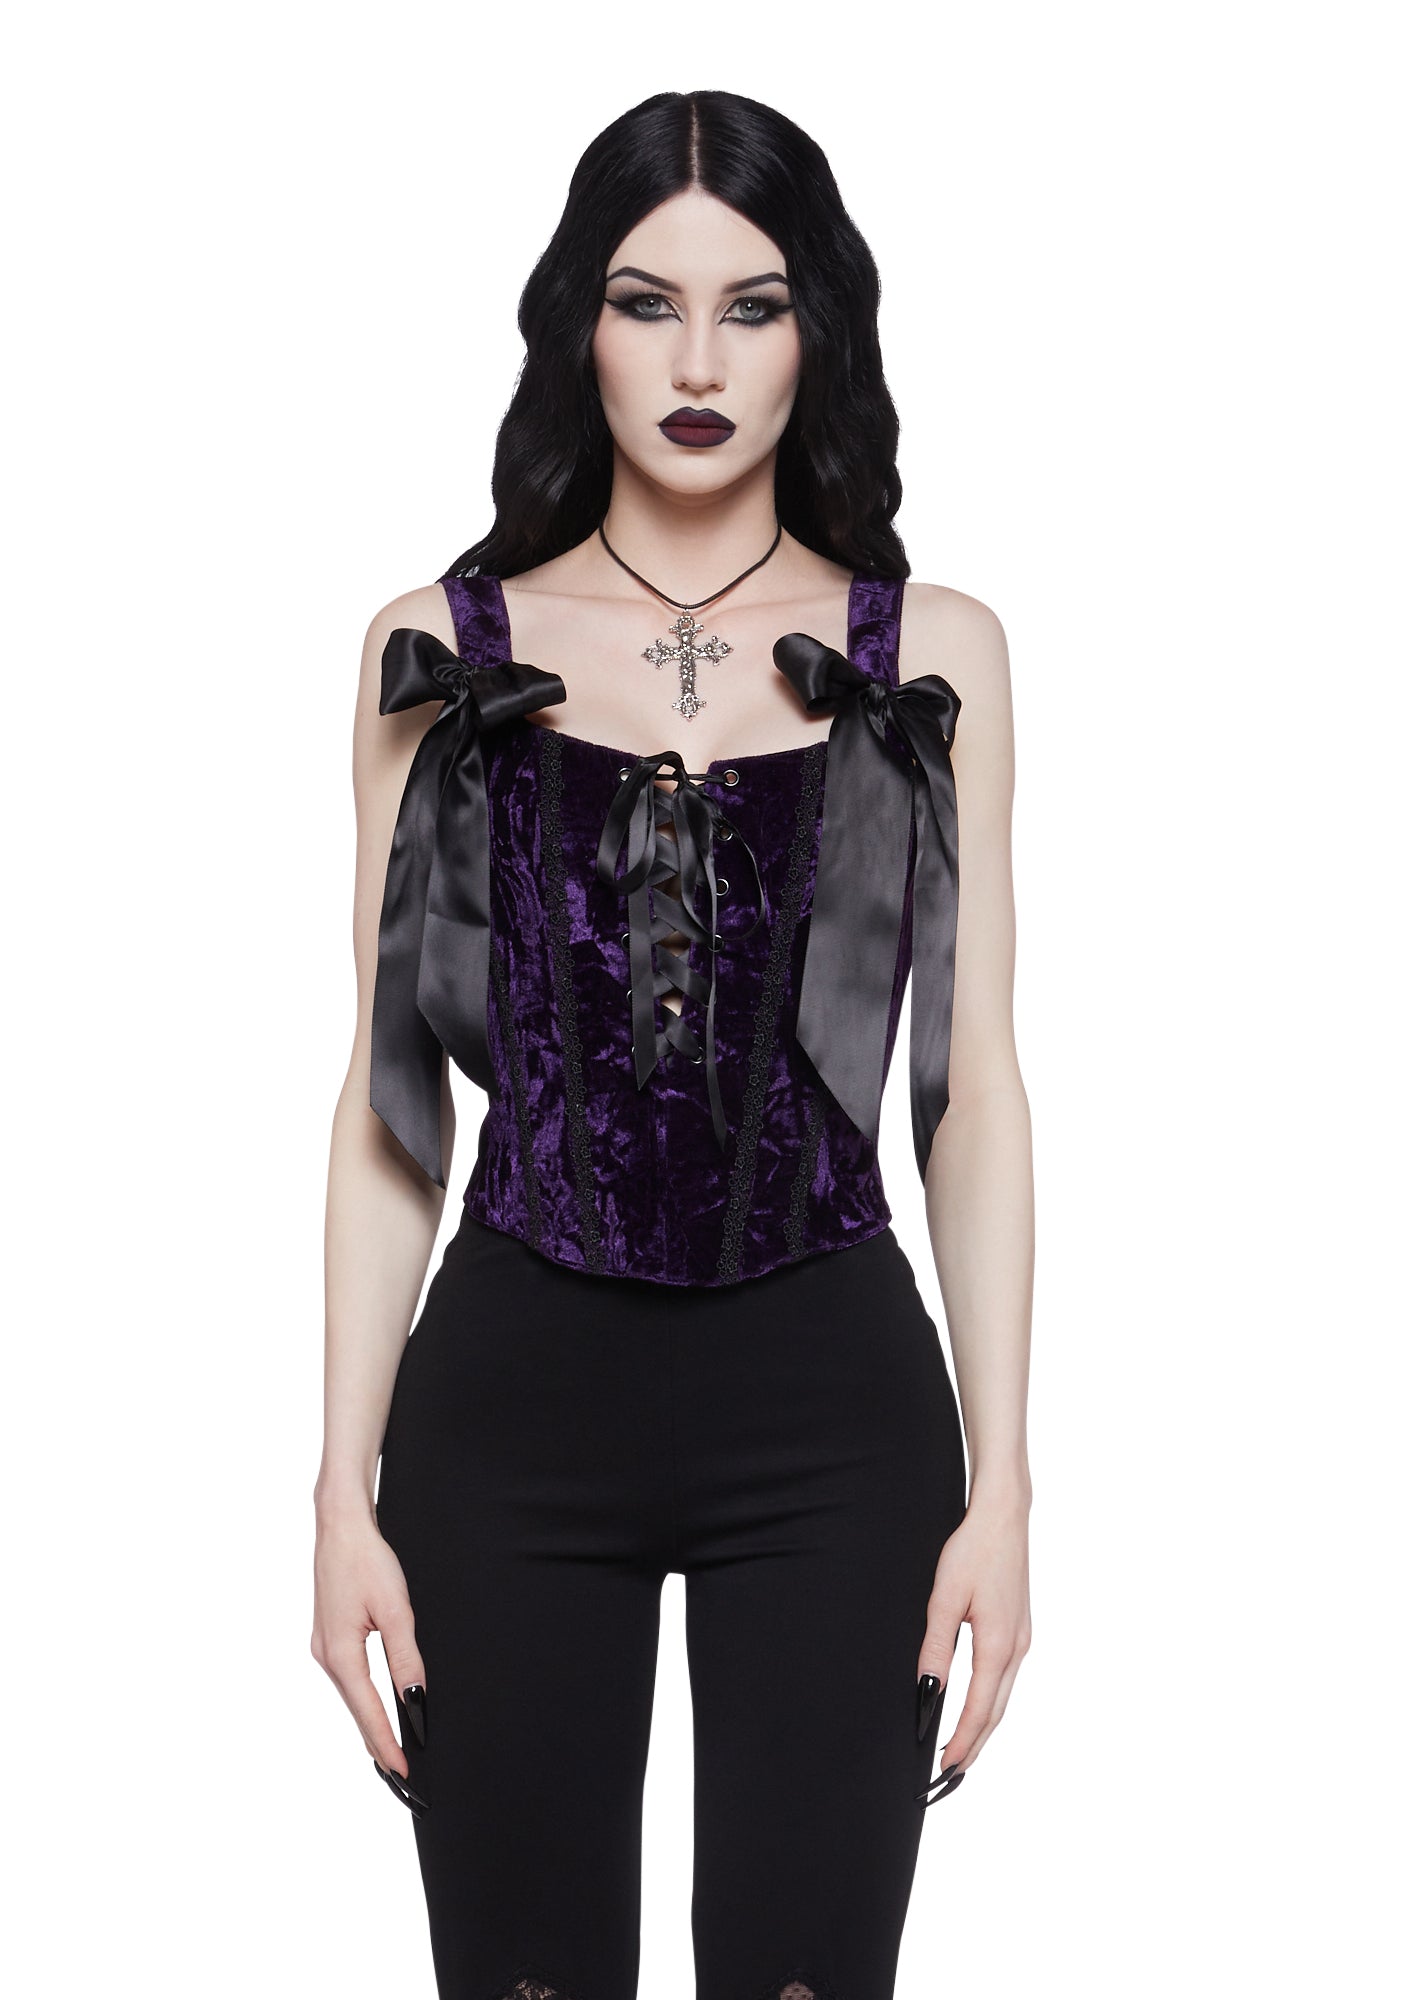 Jaded Rose strapless corset top in black PU